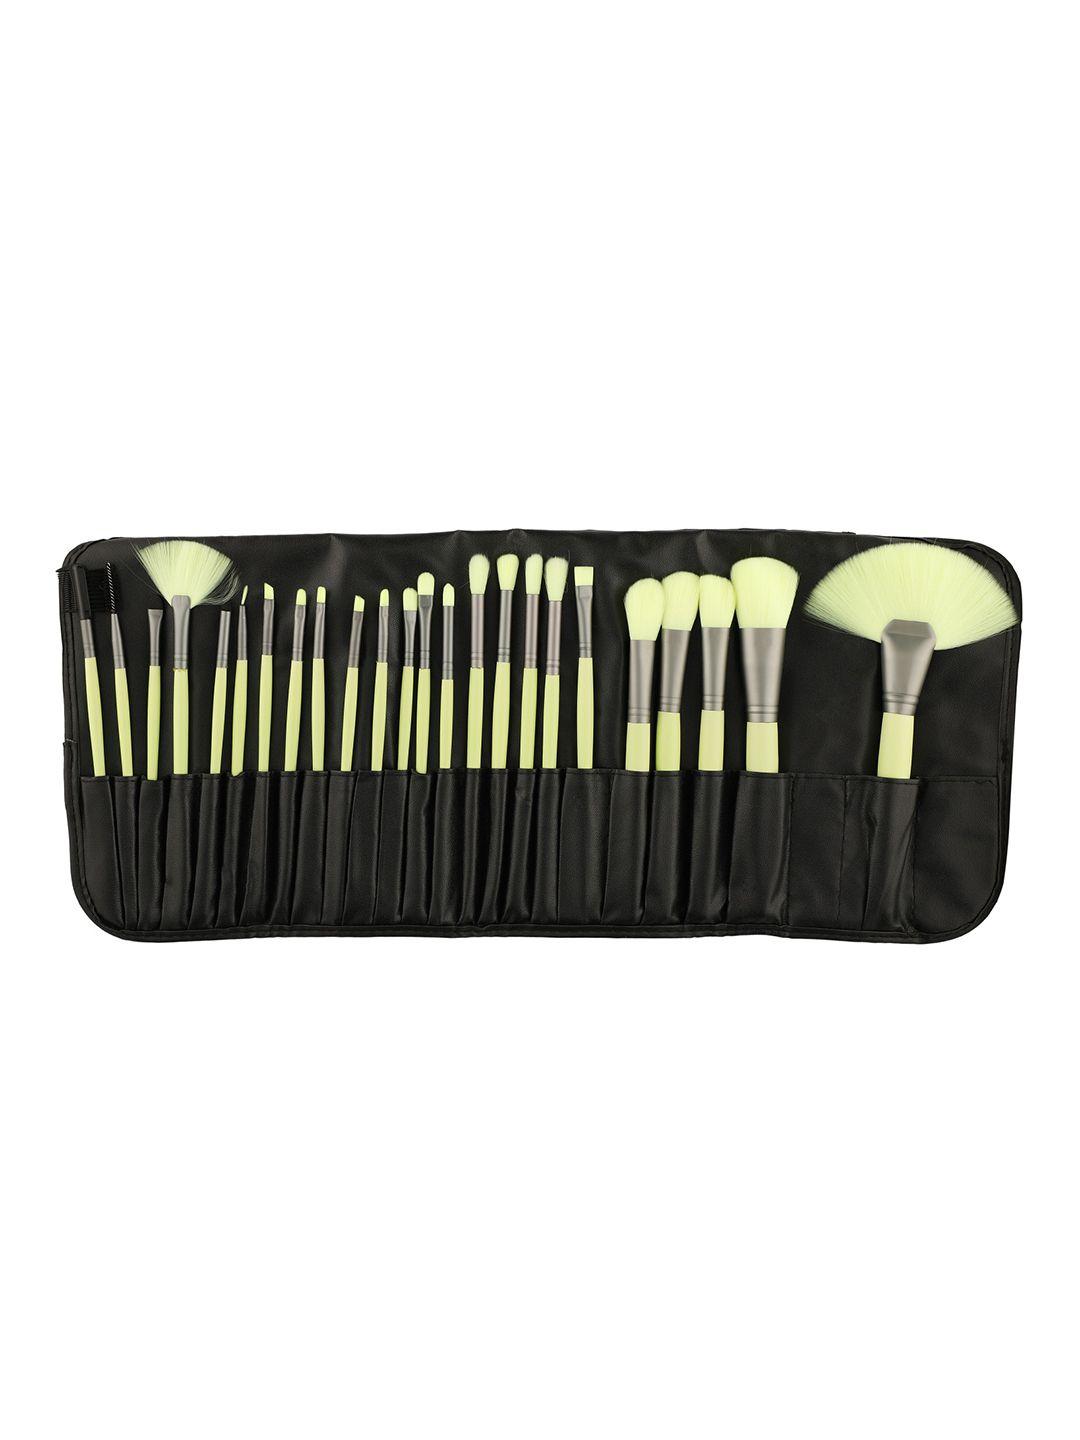 beaute secrets  24 pcs premium cosmetic makeup brush set